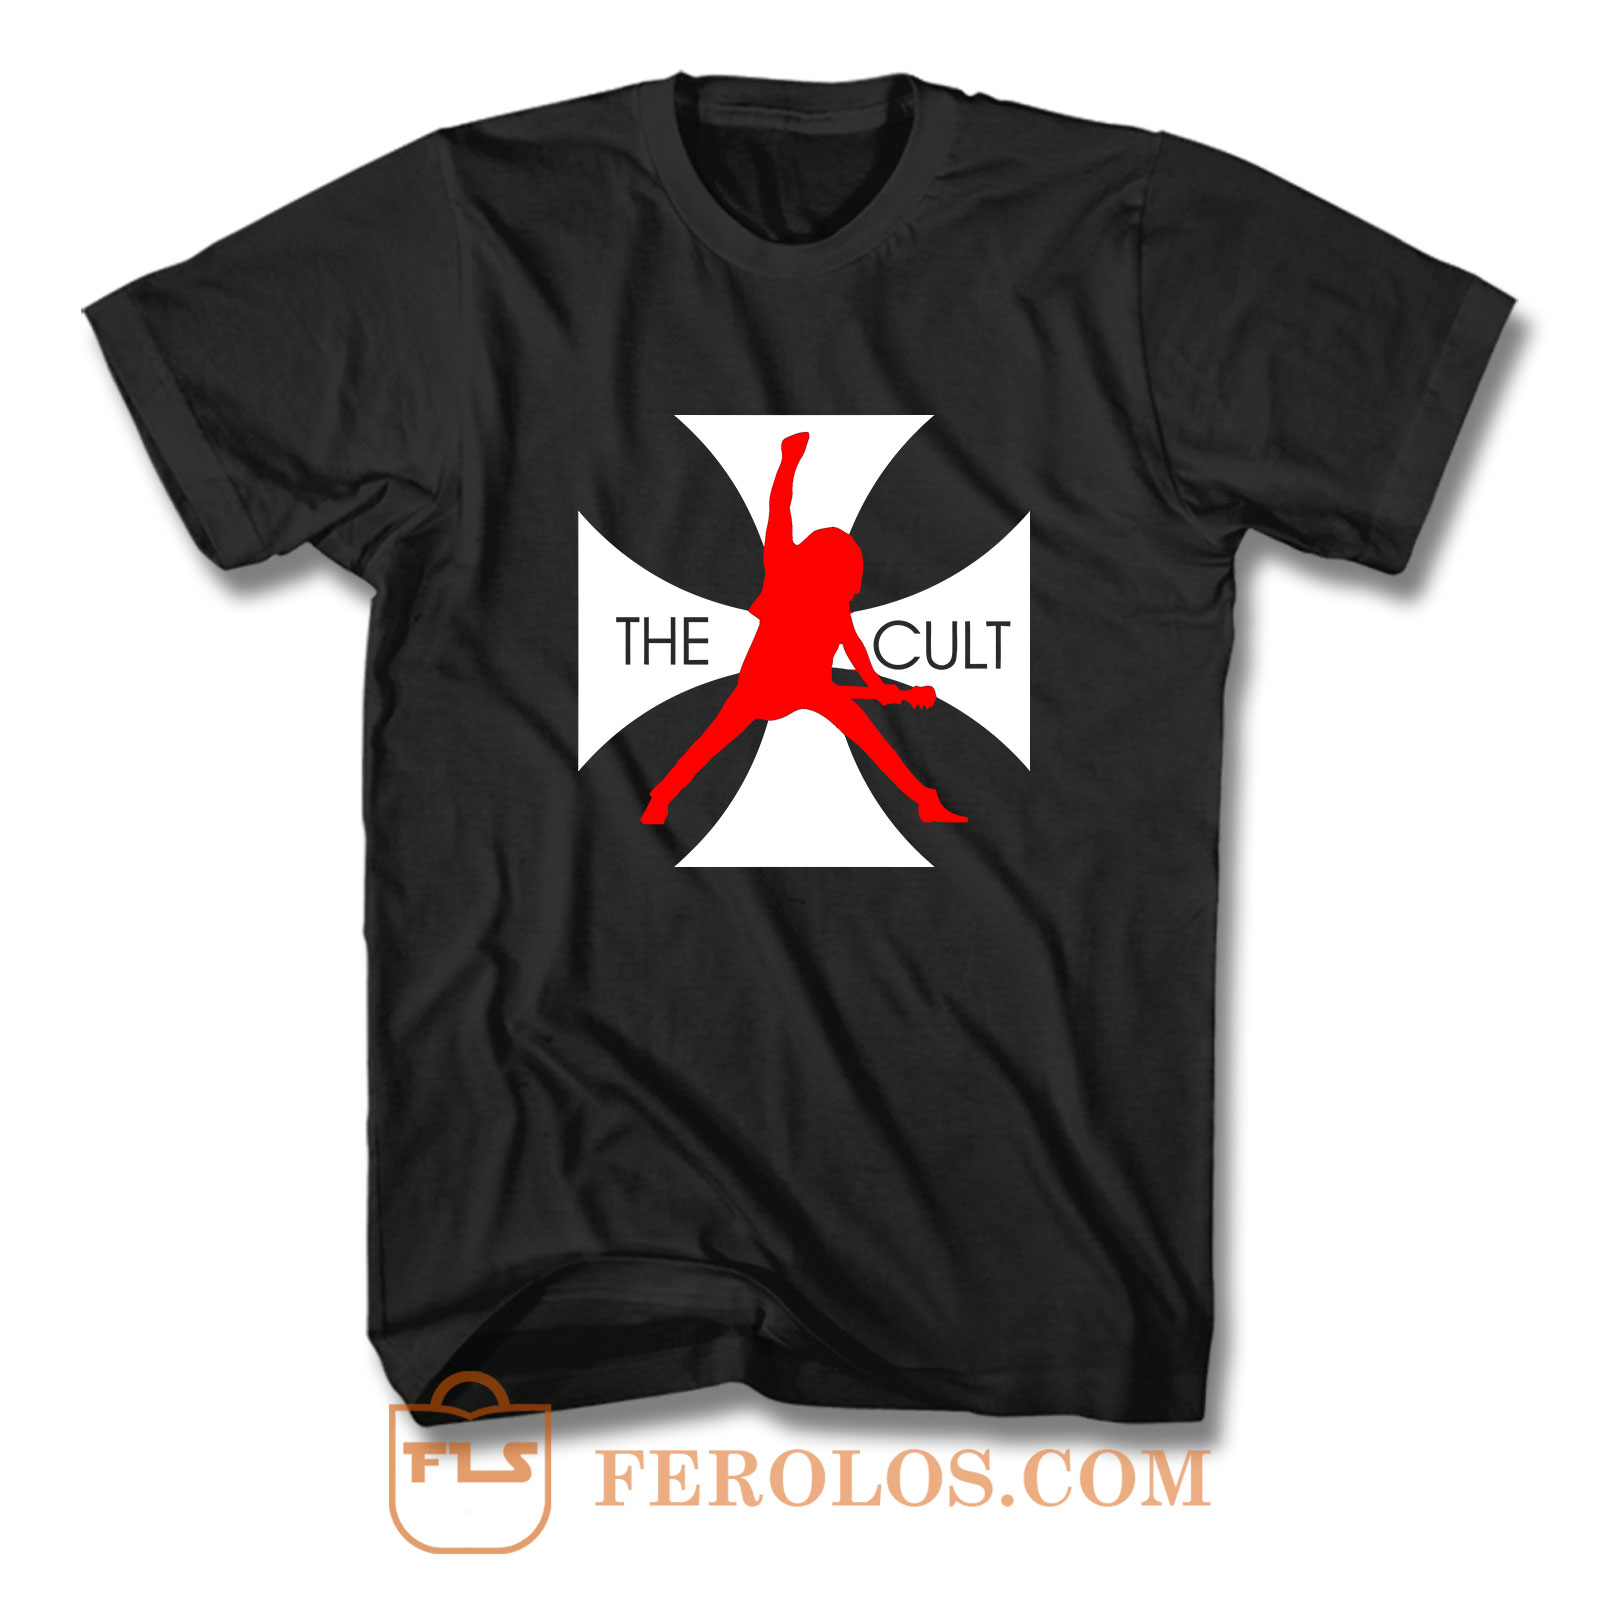 The Cult Rock Band Logo T Shirt Feroloscom